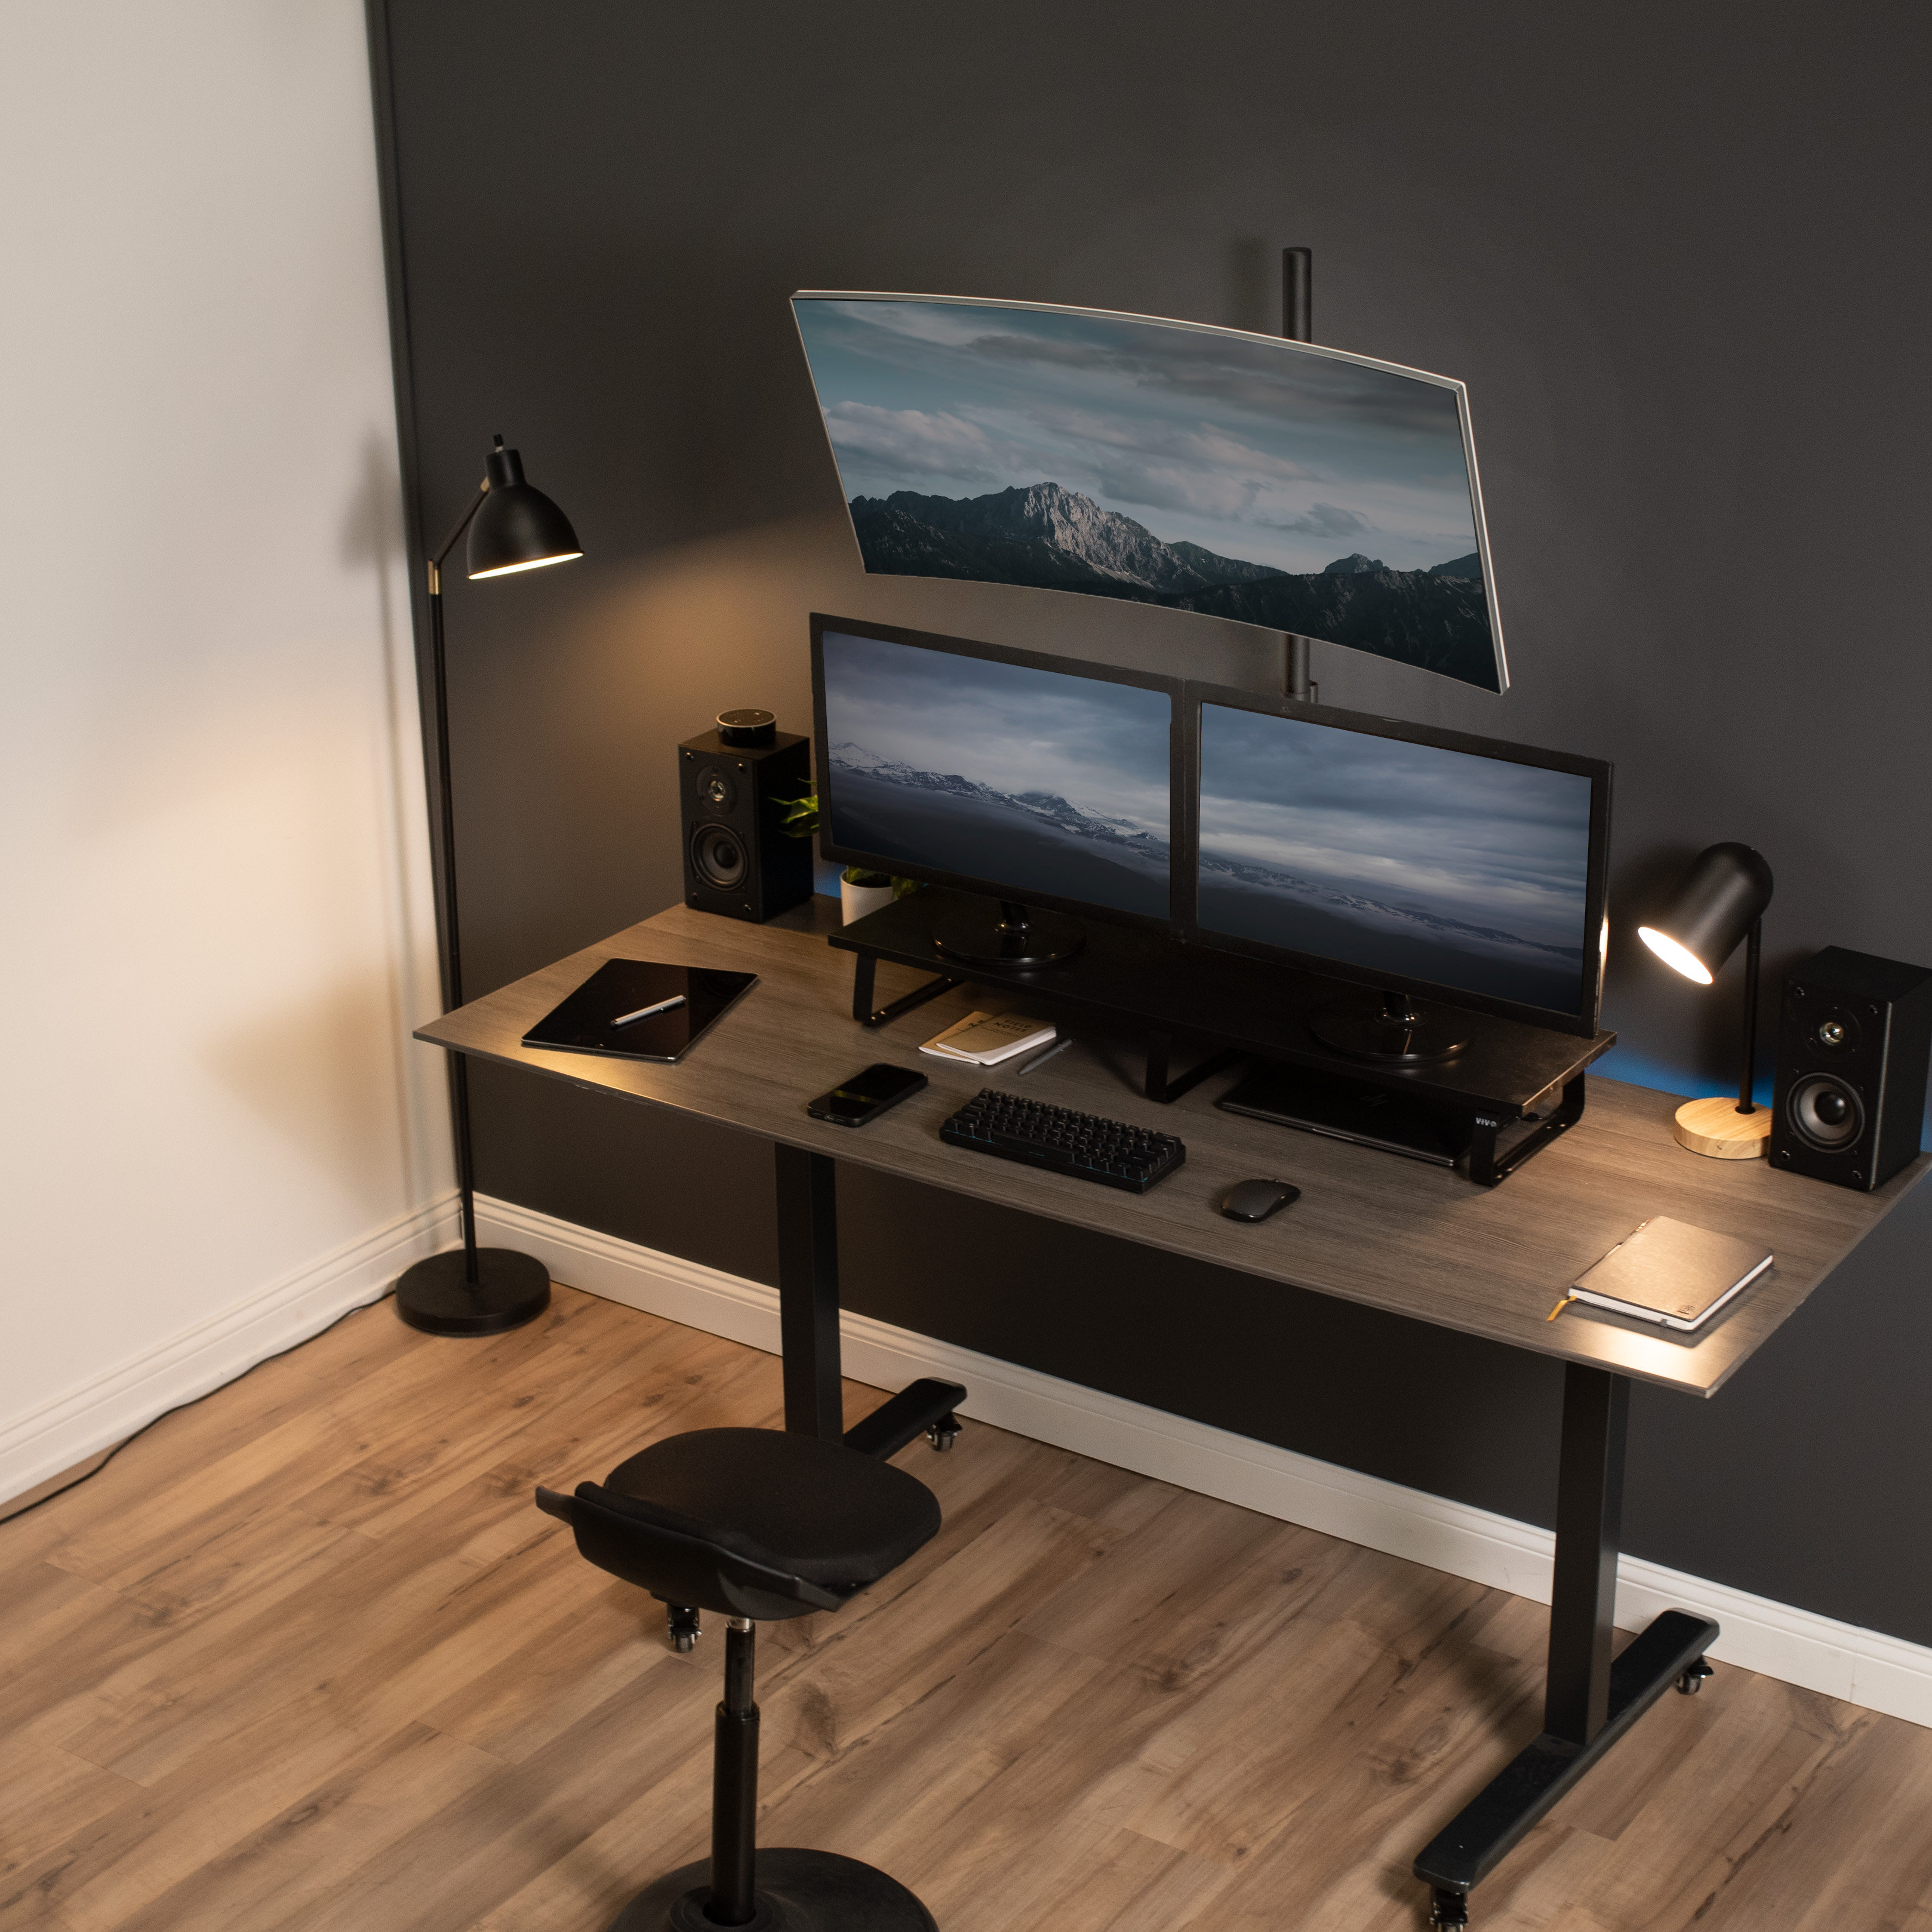 VIvo Single Monitor Extra Tall Desk Mount Wayfair